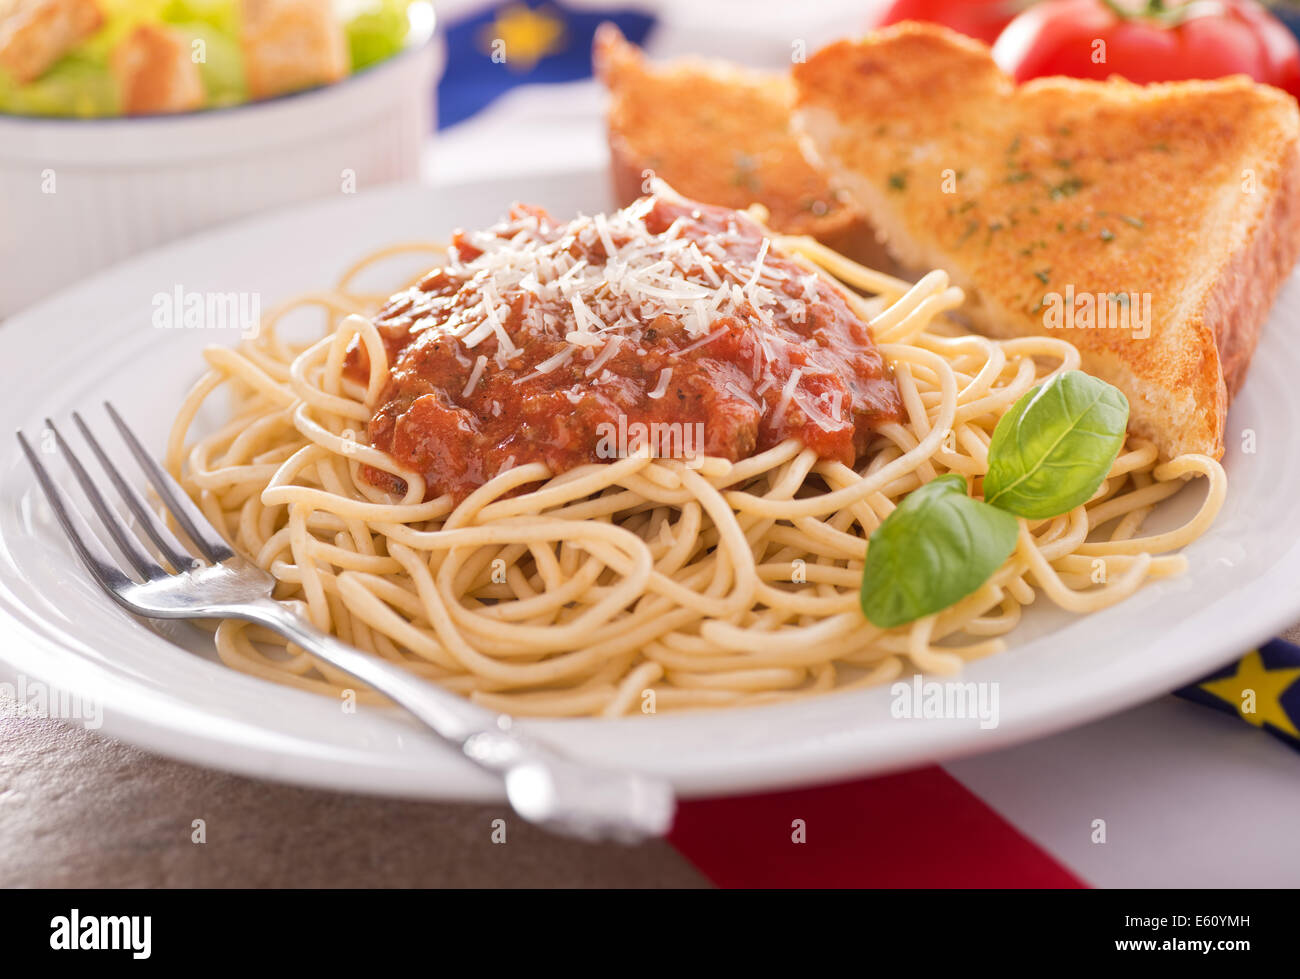 Homemade spaghetti with meat sauce, garlic bread, and caesar salad. Stock Photo